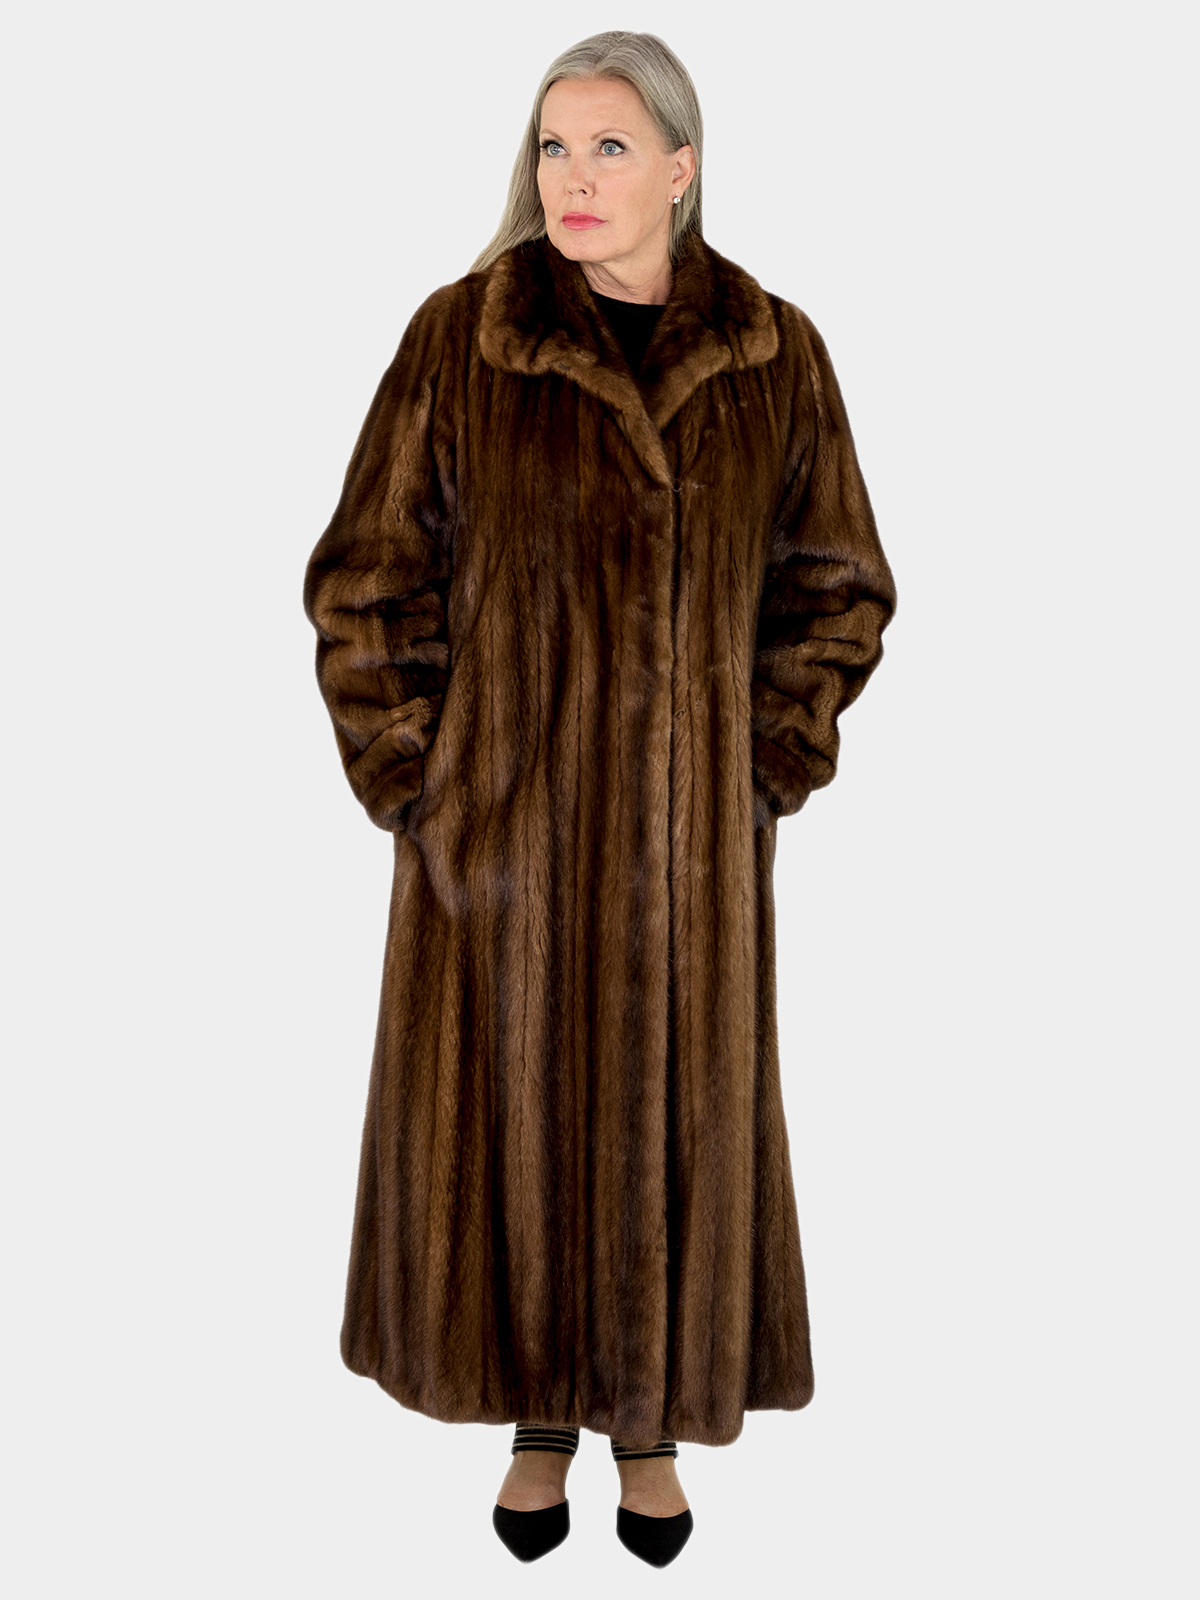 Woman's Demi Buff Female Mink Fur Coat